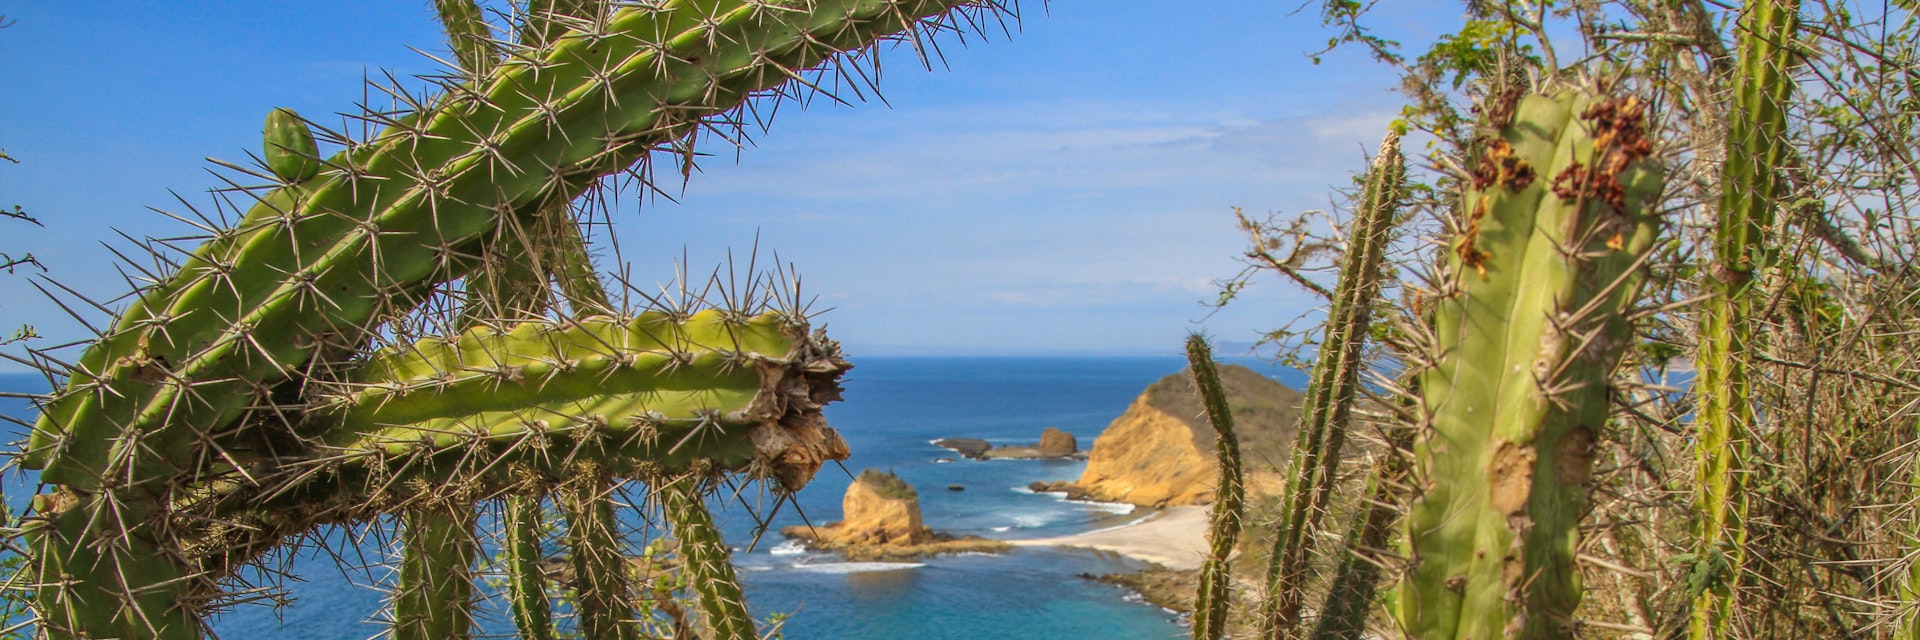 Beautiful bay with sandy beach Los Frailes with cactus plants near Canoa, Puerto Lopez, Pacific Coast, Ecuador (no people)